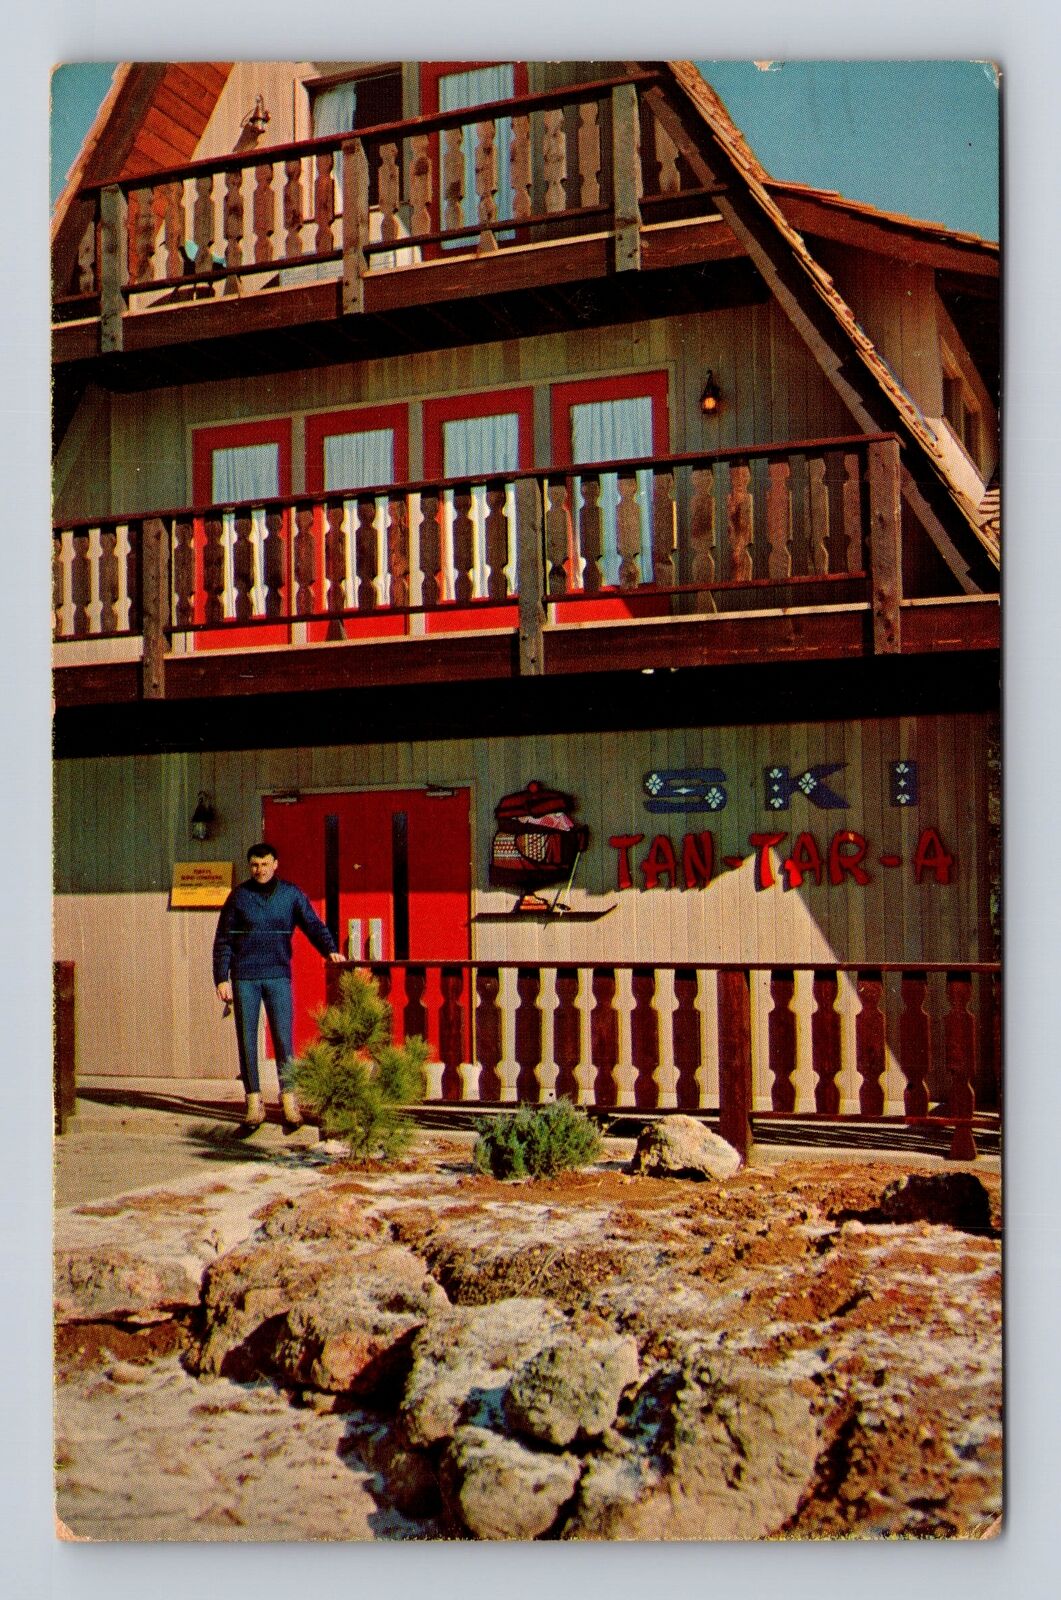 Osage Beach MO-Missouri, Tan-Tar-A Resort, Advertising, Vintage c1966 Postcard